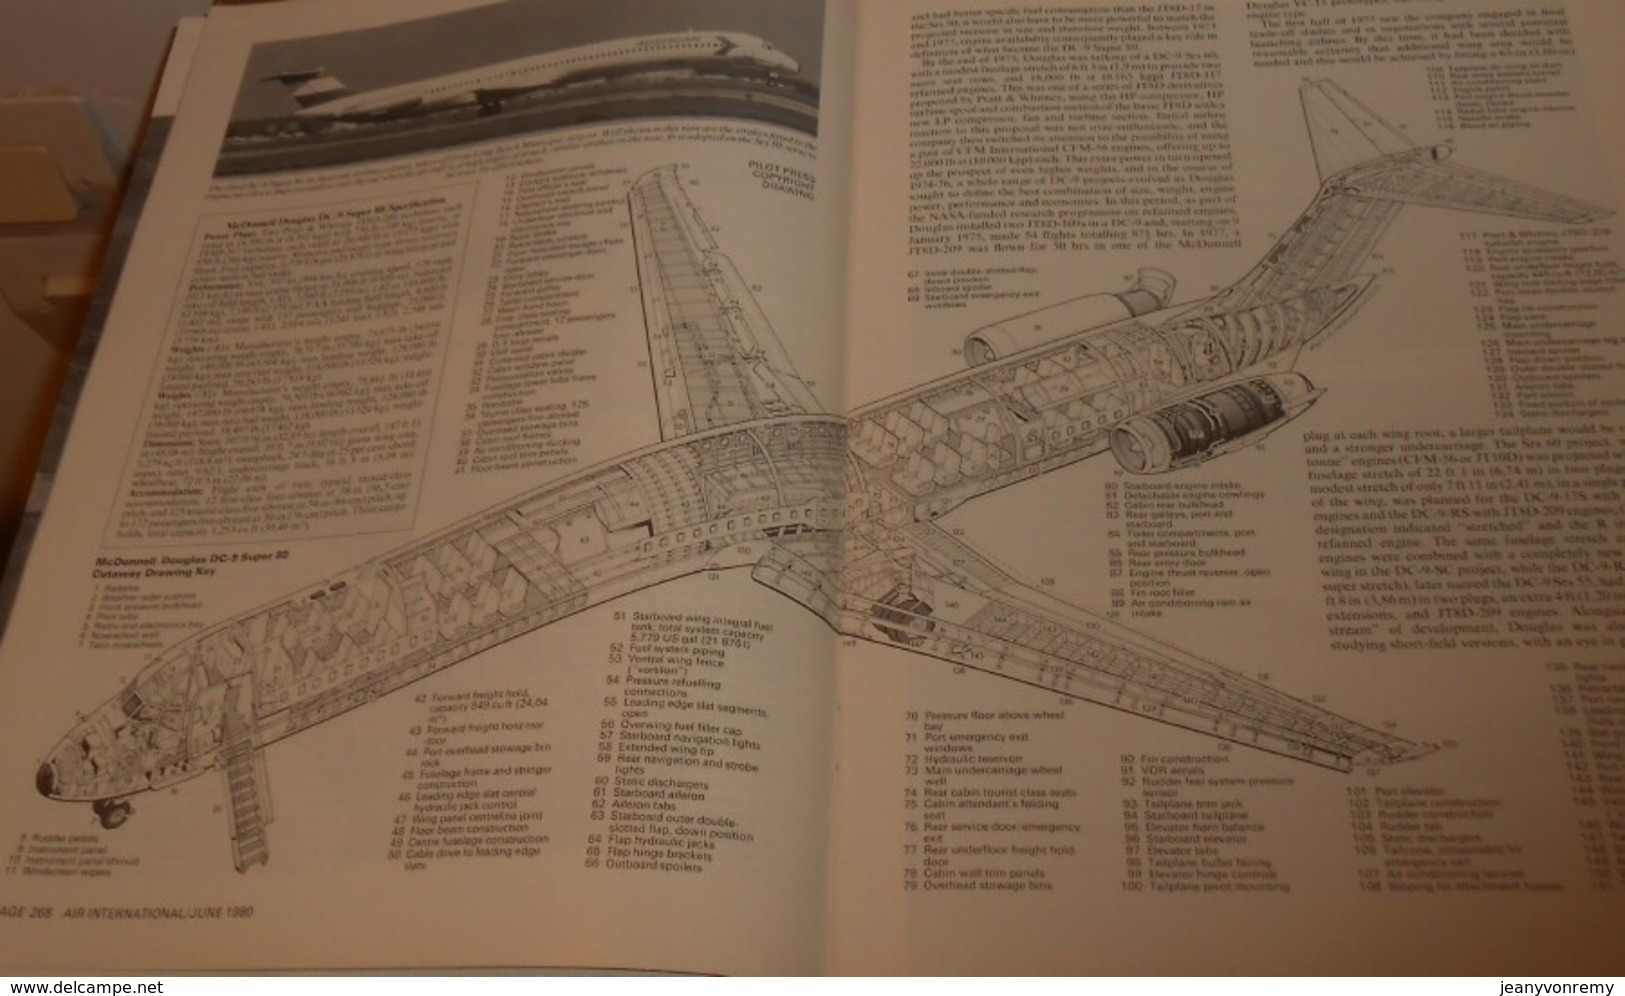 Air International. Volume 18. N°6. Juin 1980. - Trasporti